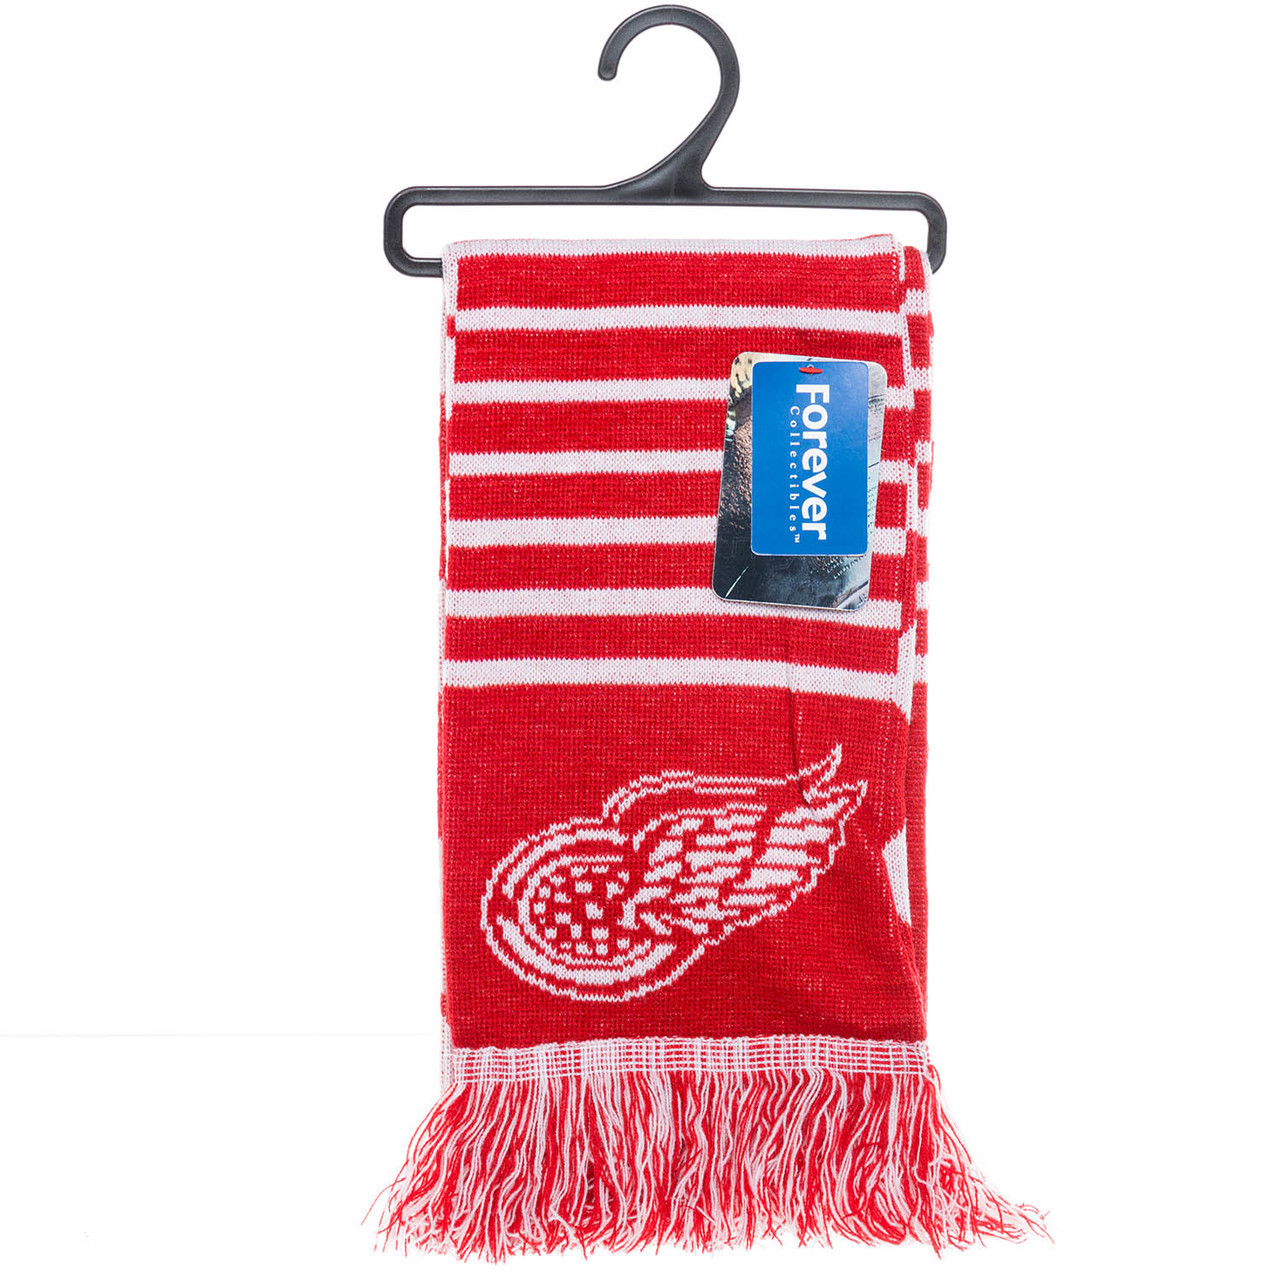 NHL Detroit Red Wings Santa Claus Snowman Ideas Logo Ugly